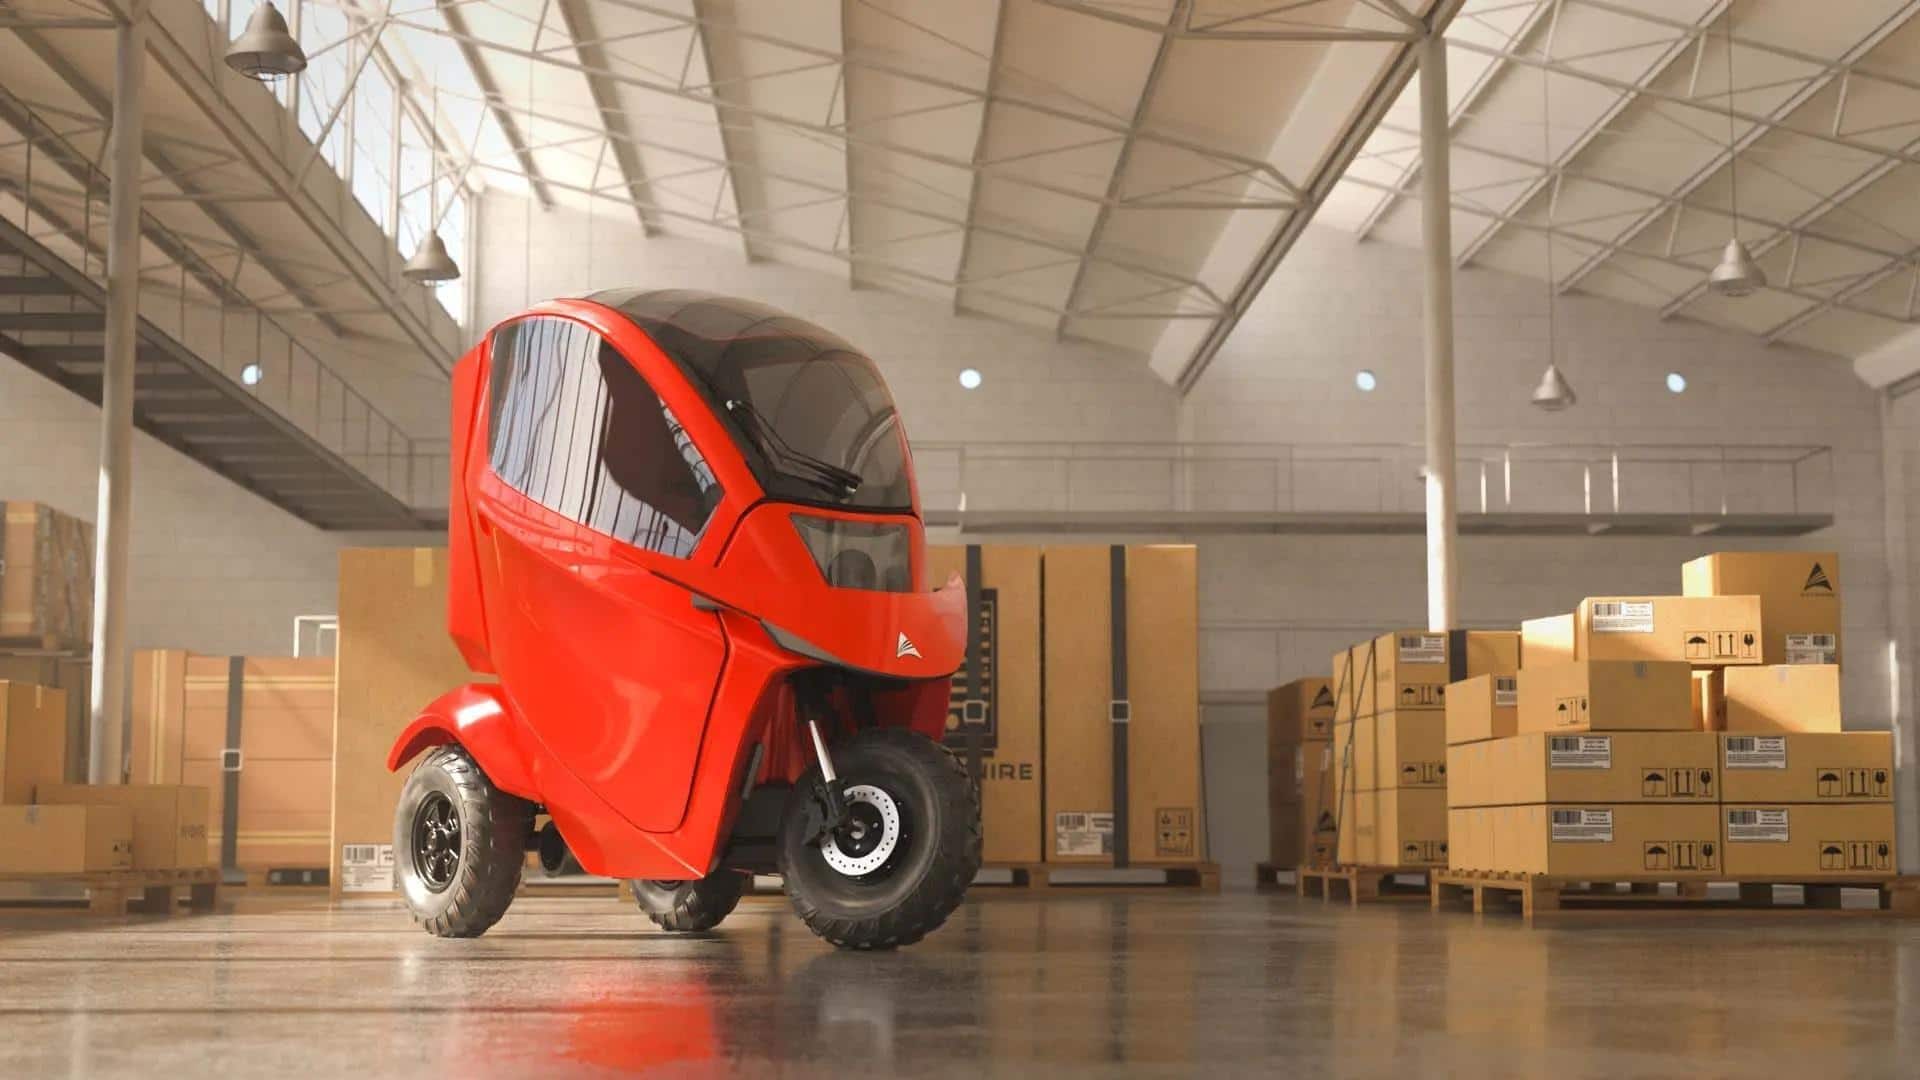 AVVENIRE reveals TECTUS EV as futuristic all-terrain mobility scooter